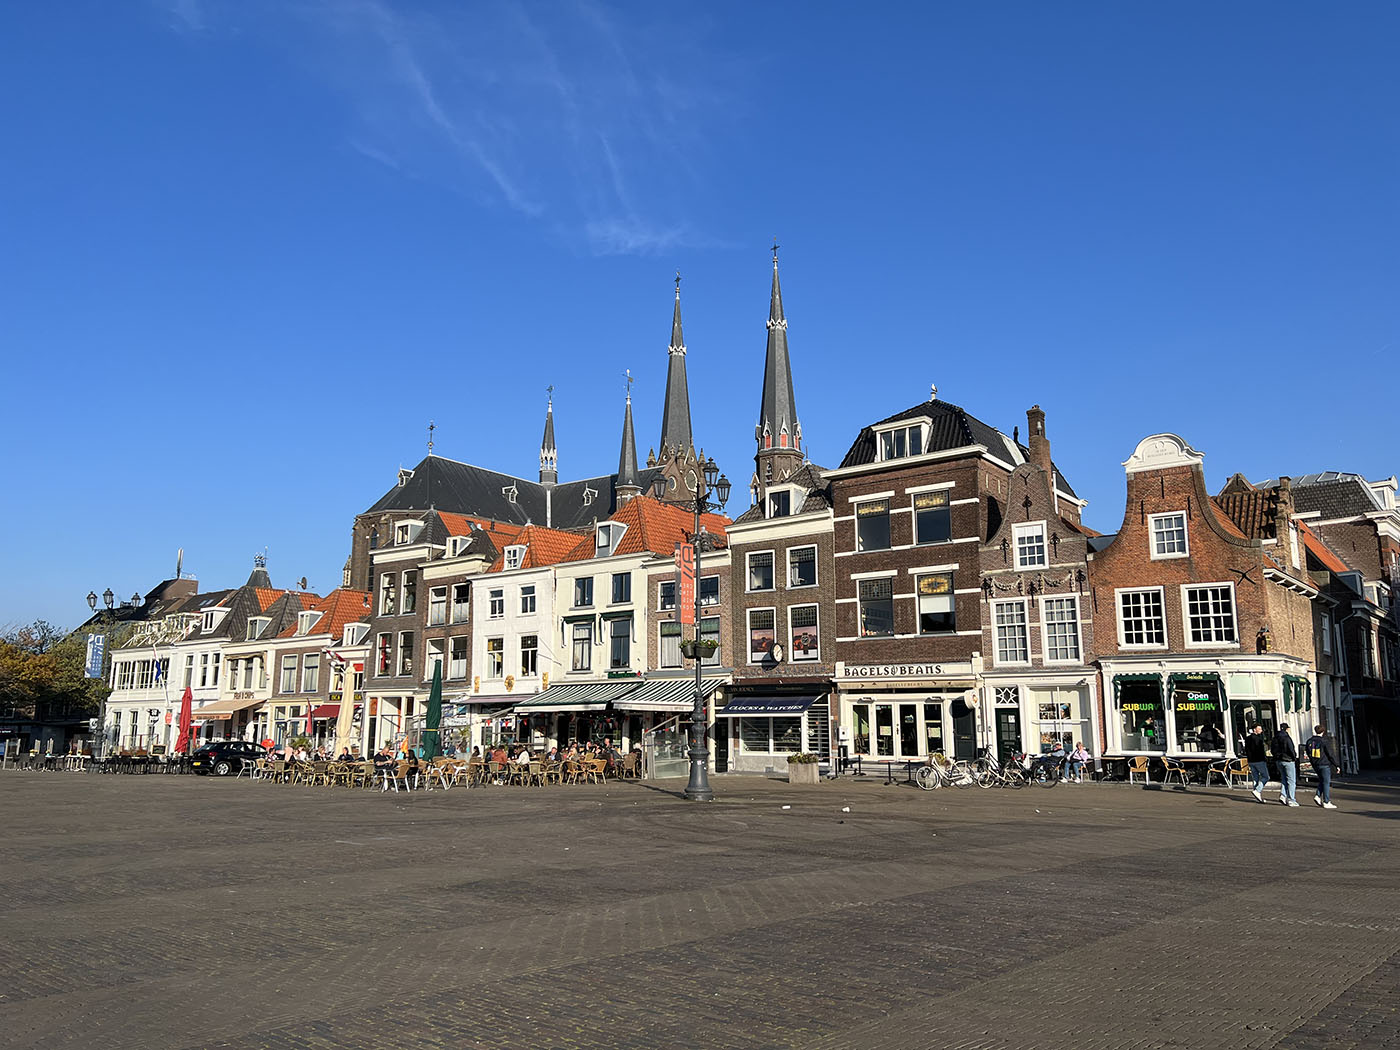 Delft's market square. Credit: Carolina Valenzuela